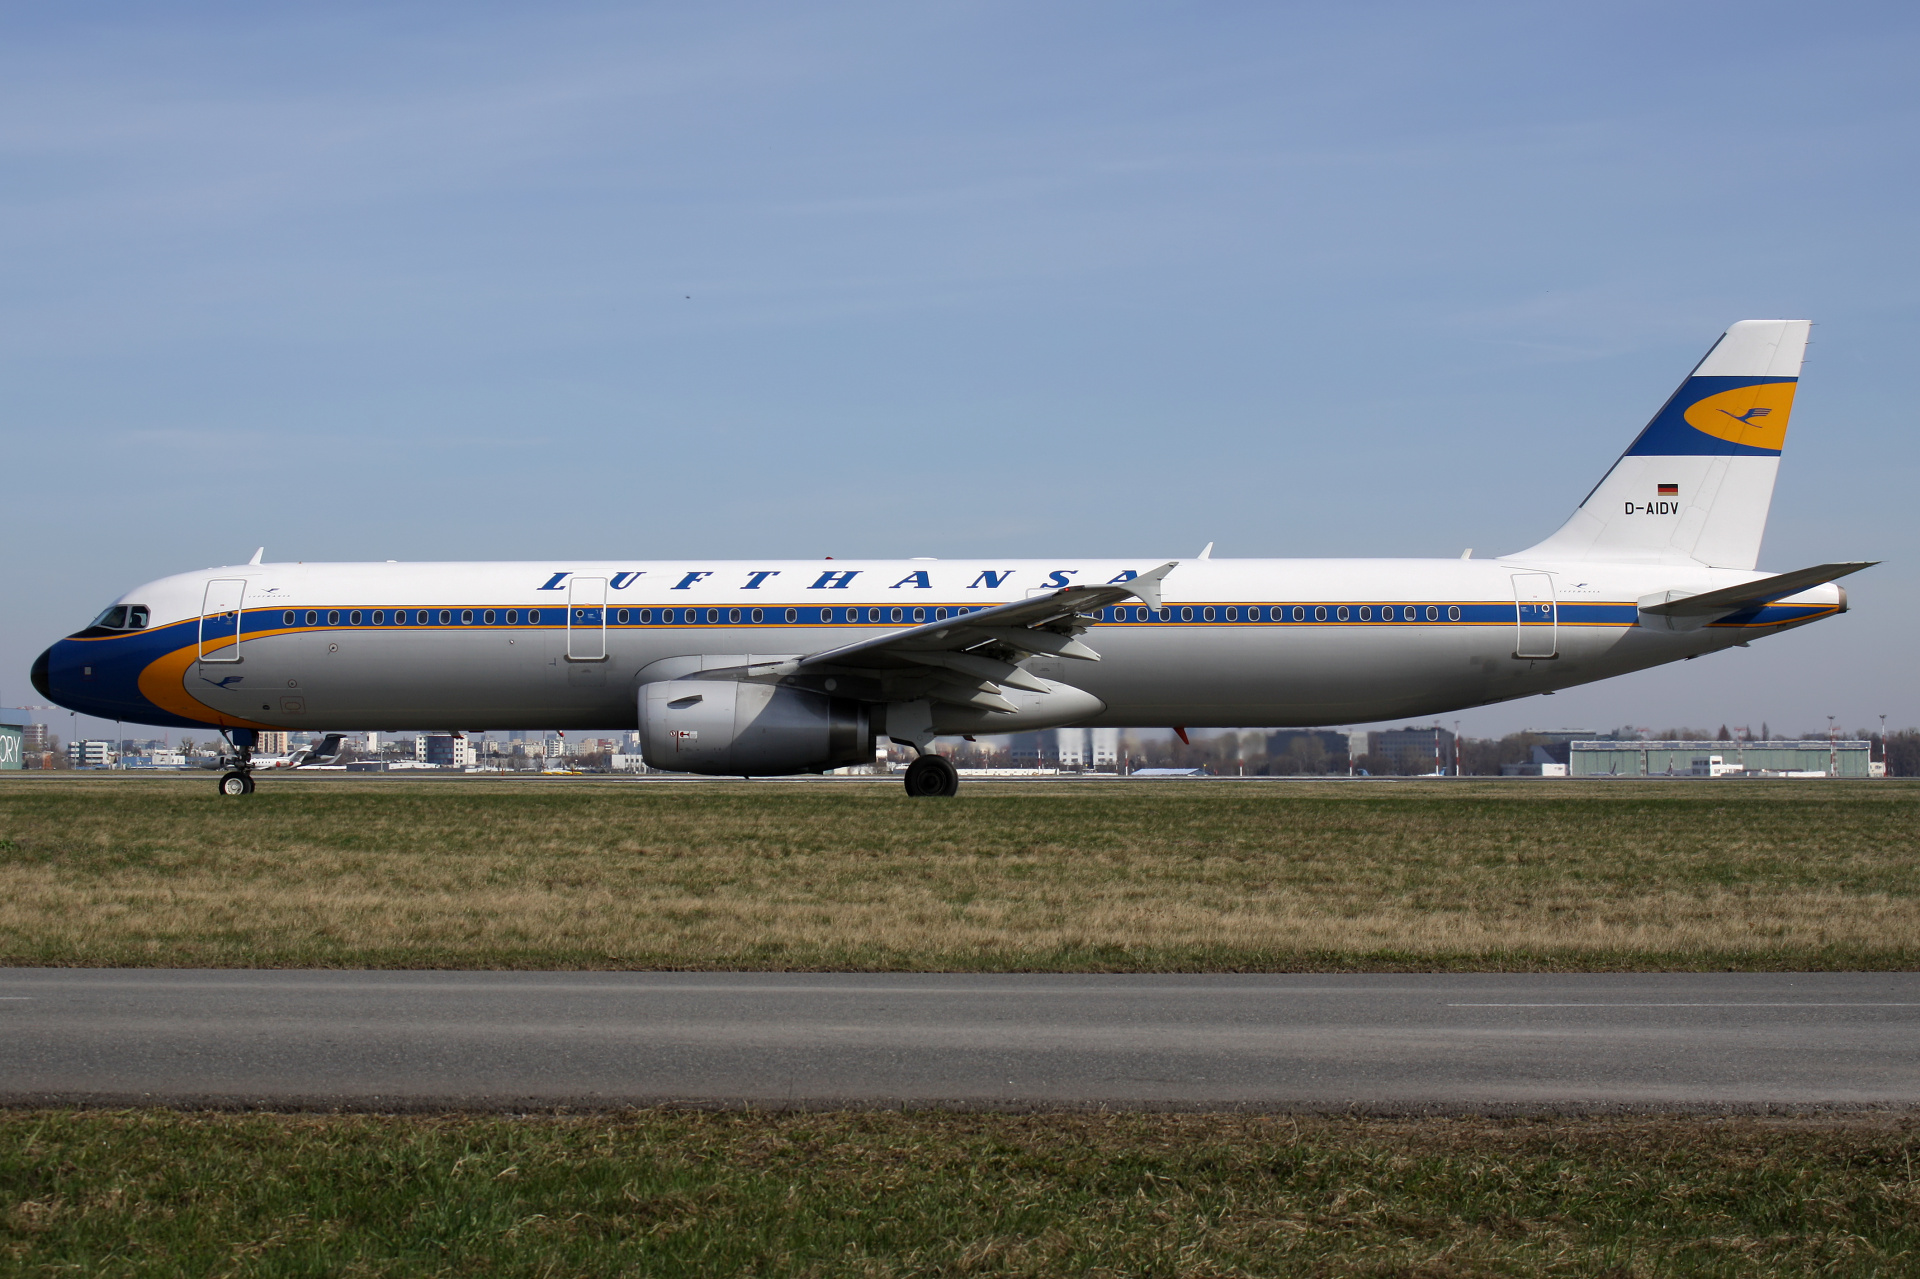 D-AIDV (retro livery) (Aircraft » EPWA Spotting » Airbus A321-200 » Lufthansa)